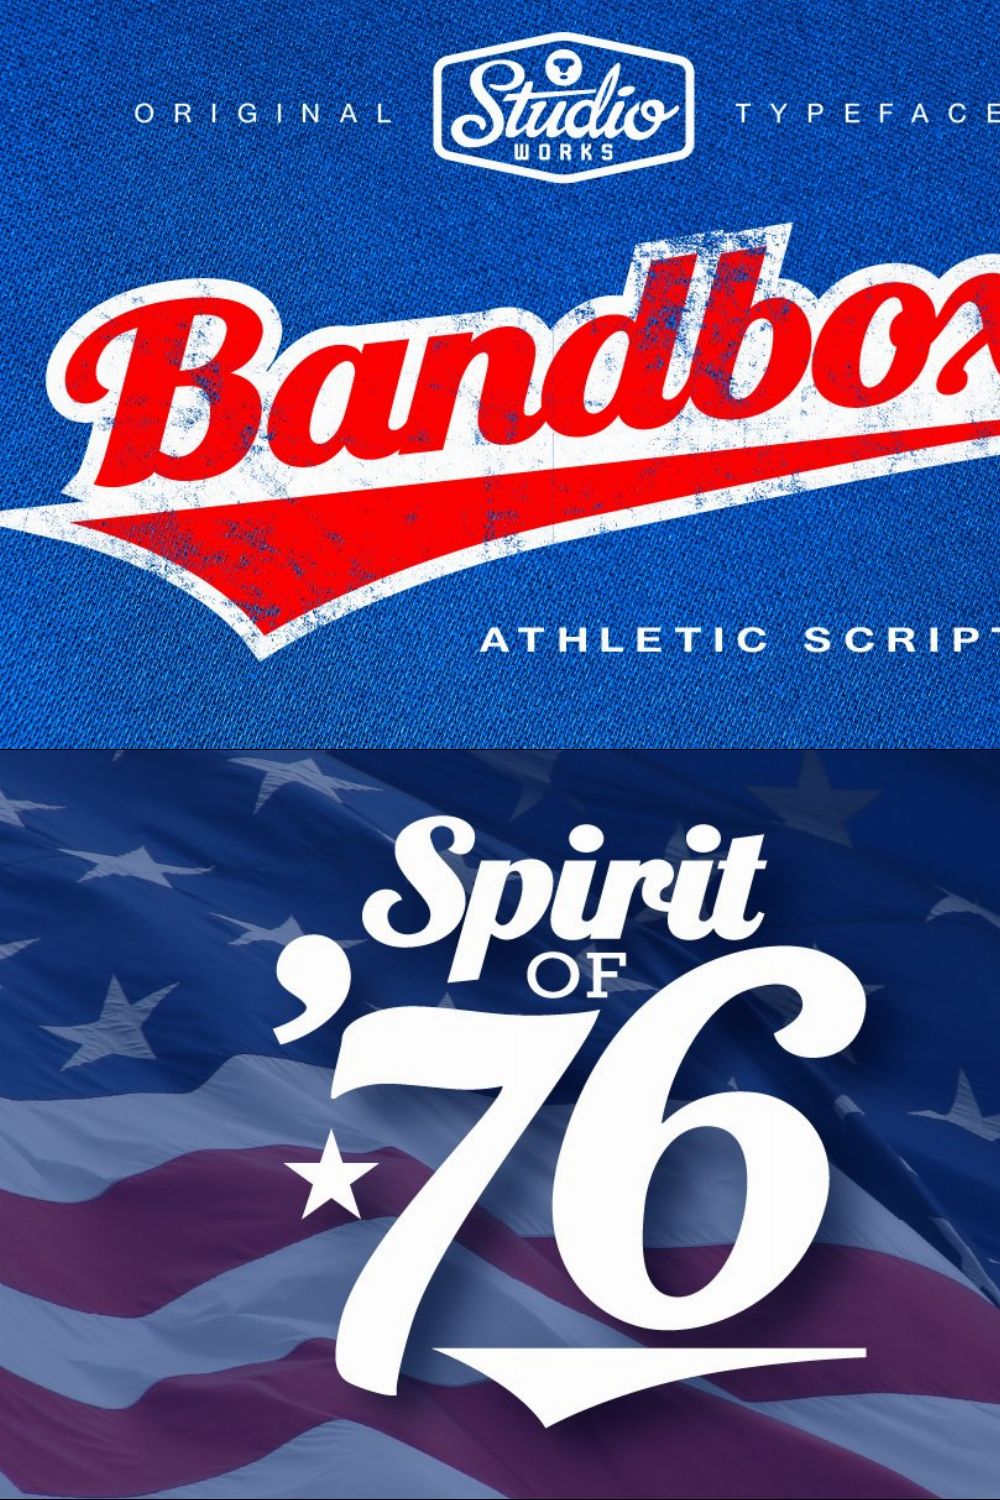 Bandbox | Athletic Script Typeface pinterest preview image.